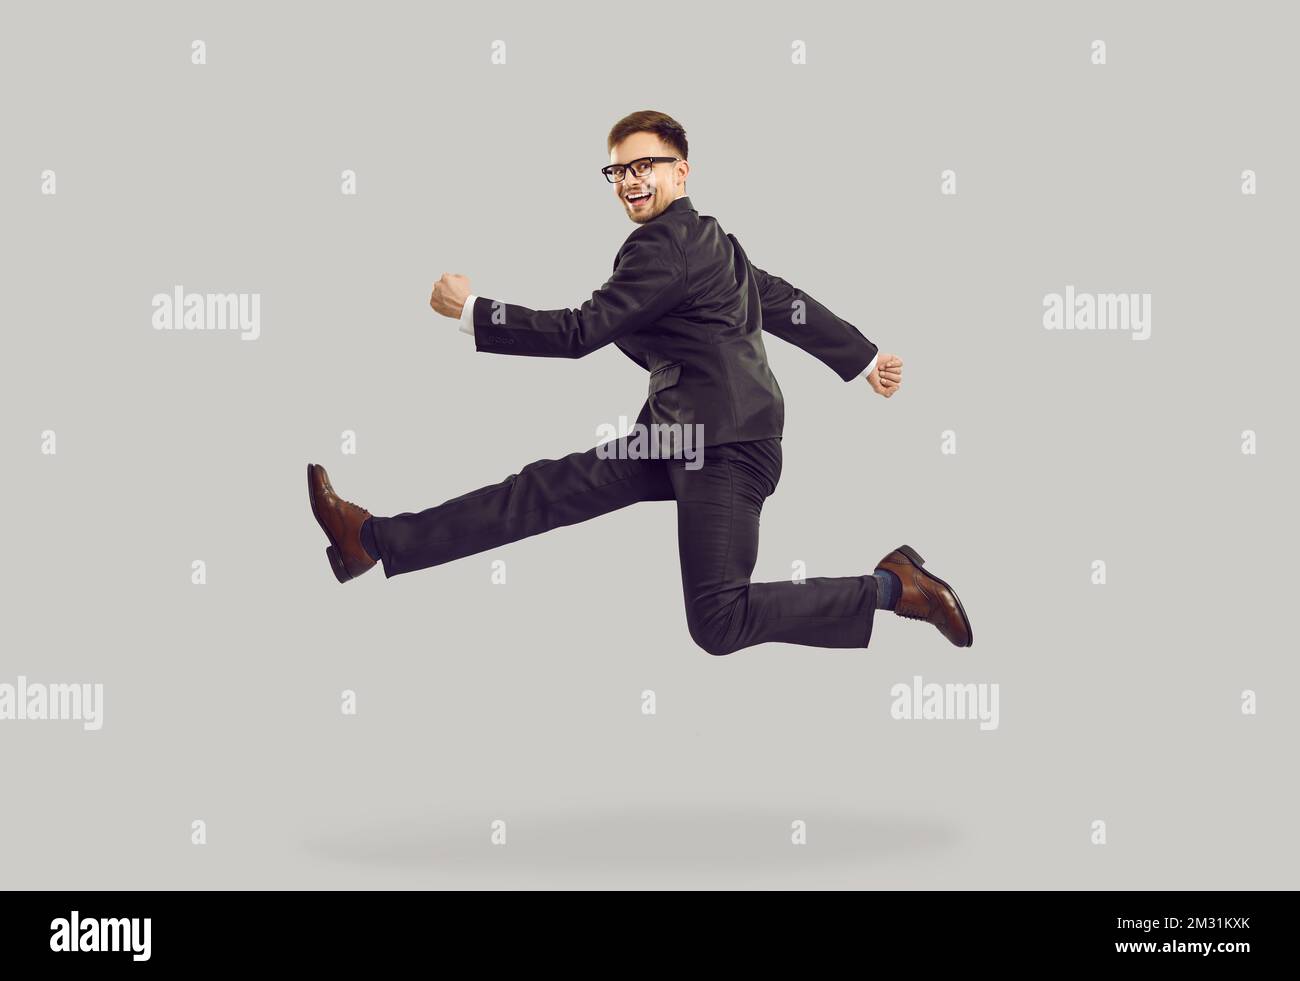 Giovane uomo caucasico che salta e sorride in posa di runner vestito in stile business Foto Stock